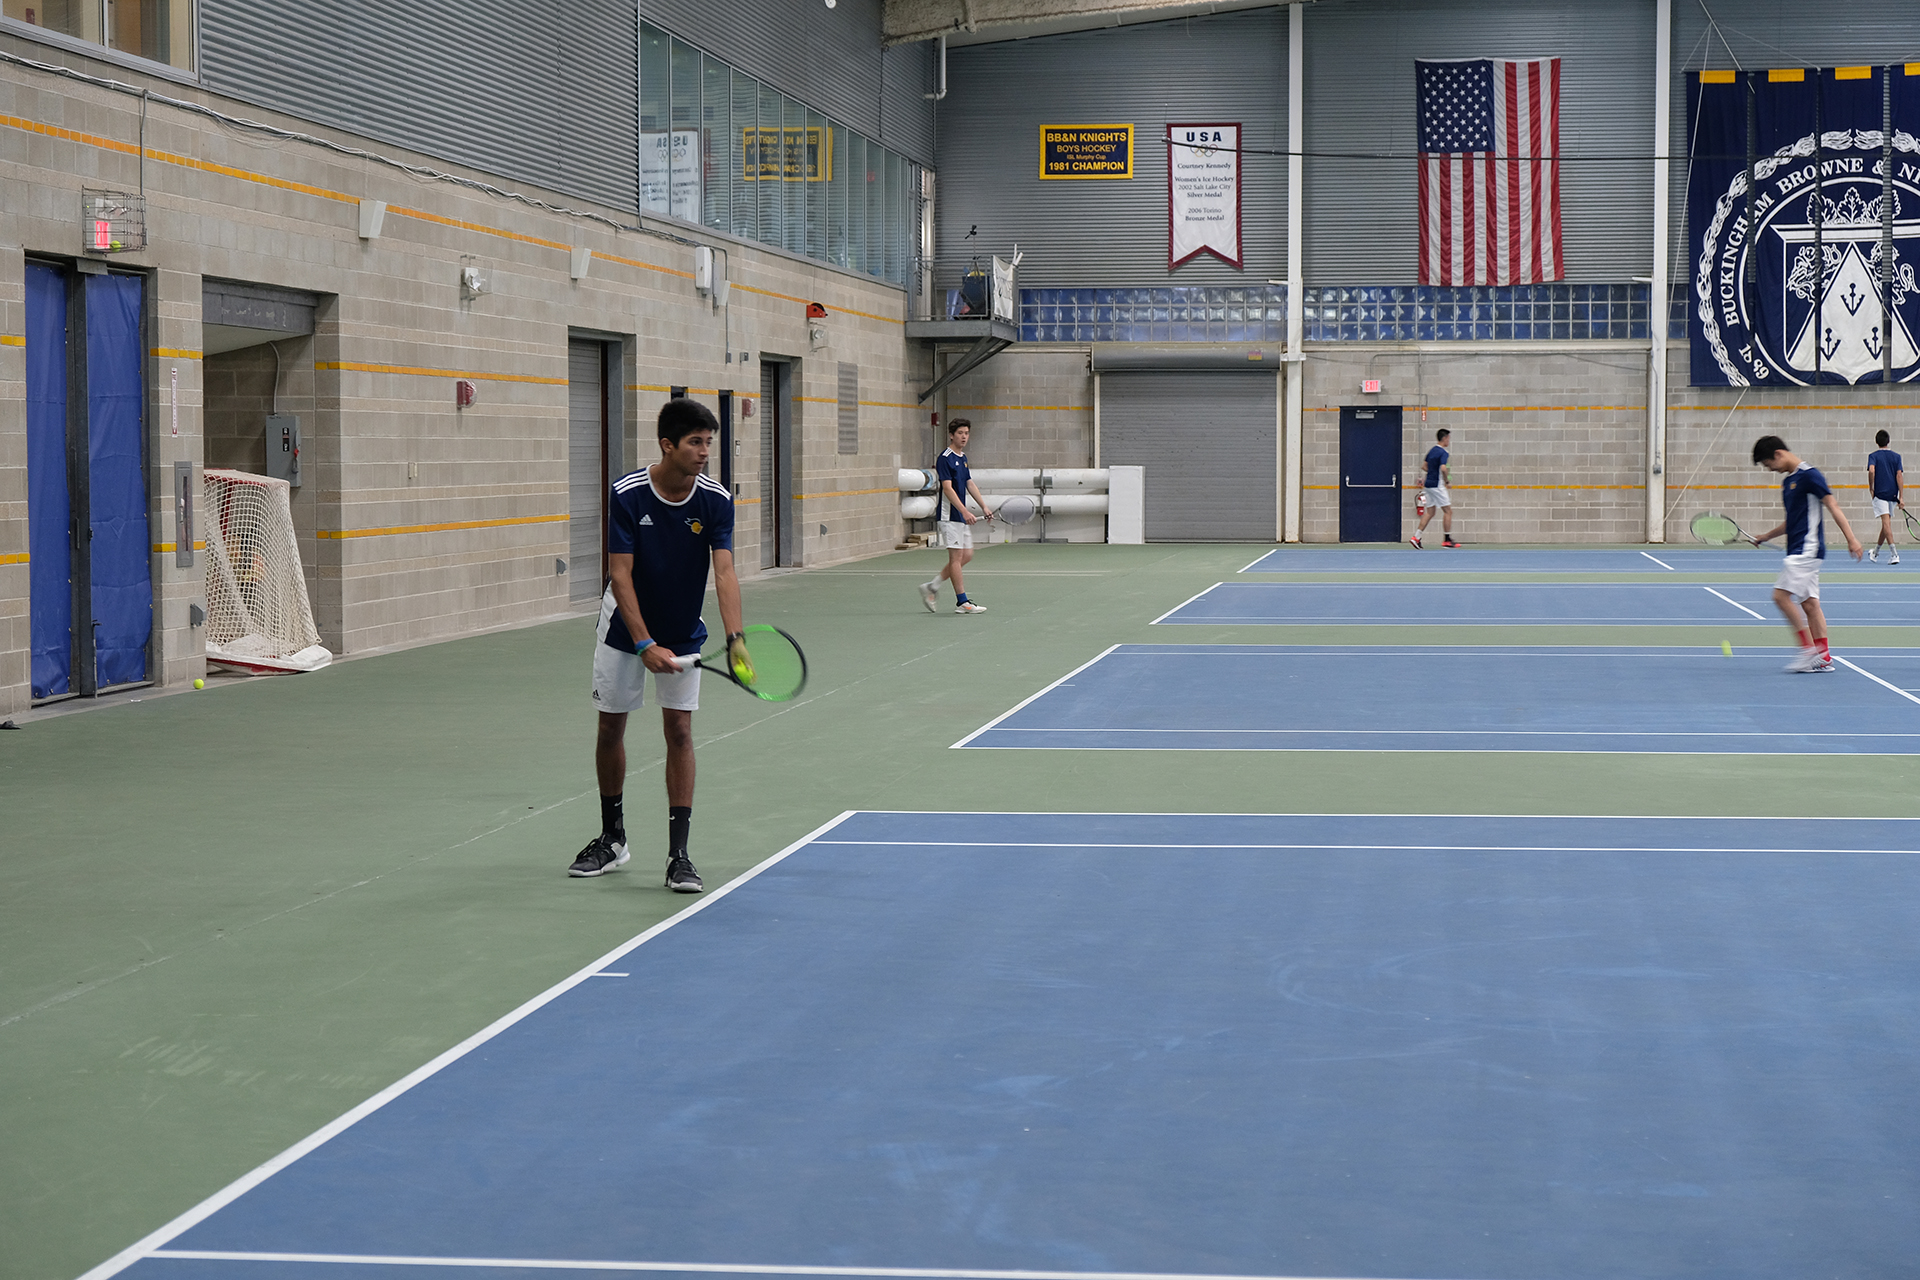 boys playing tennis.